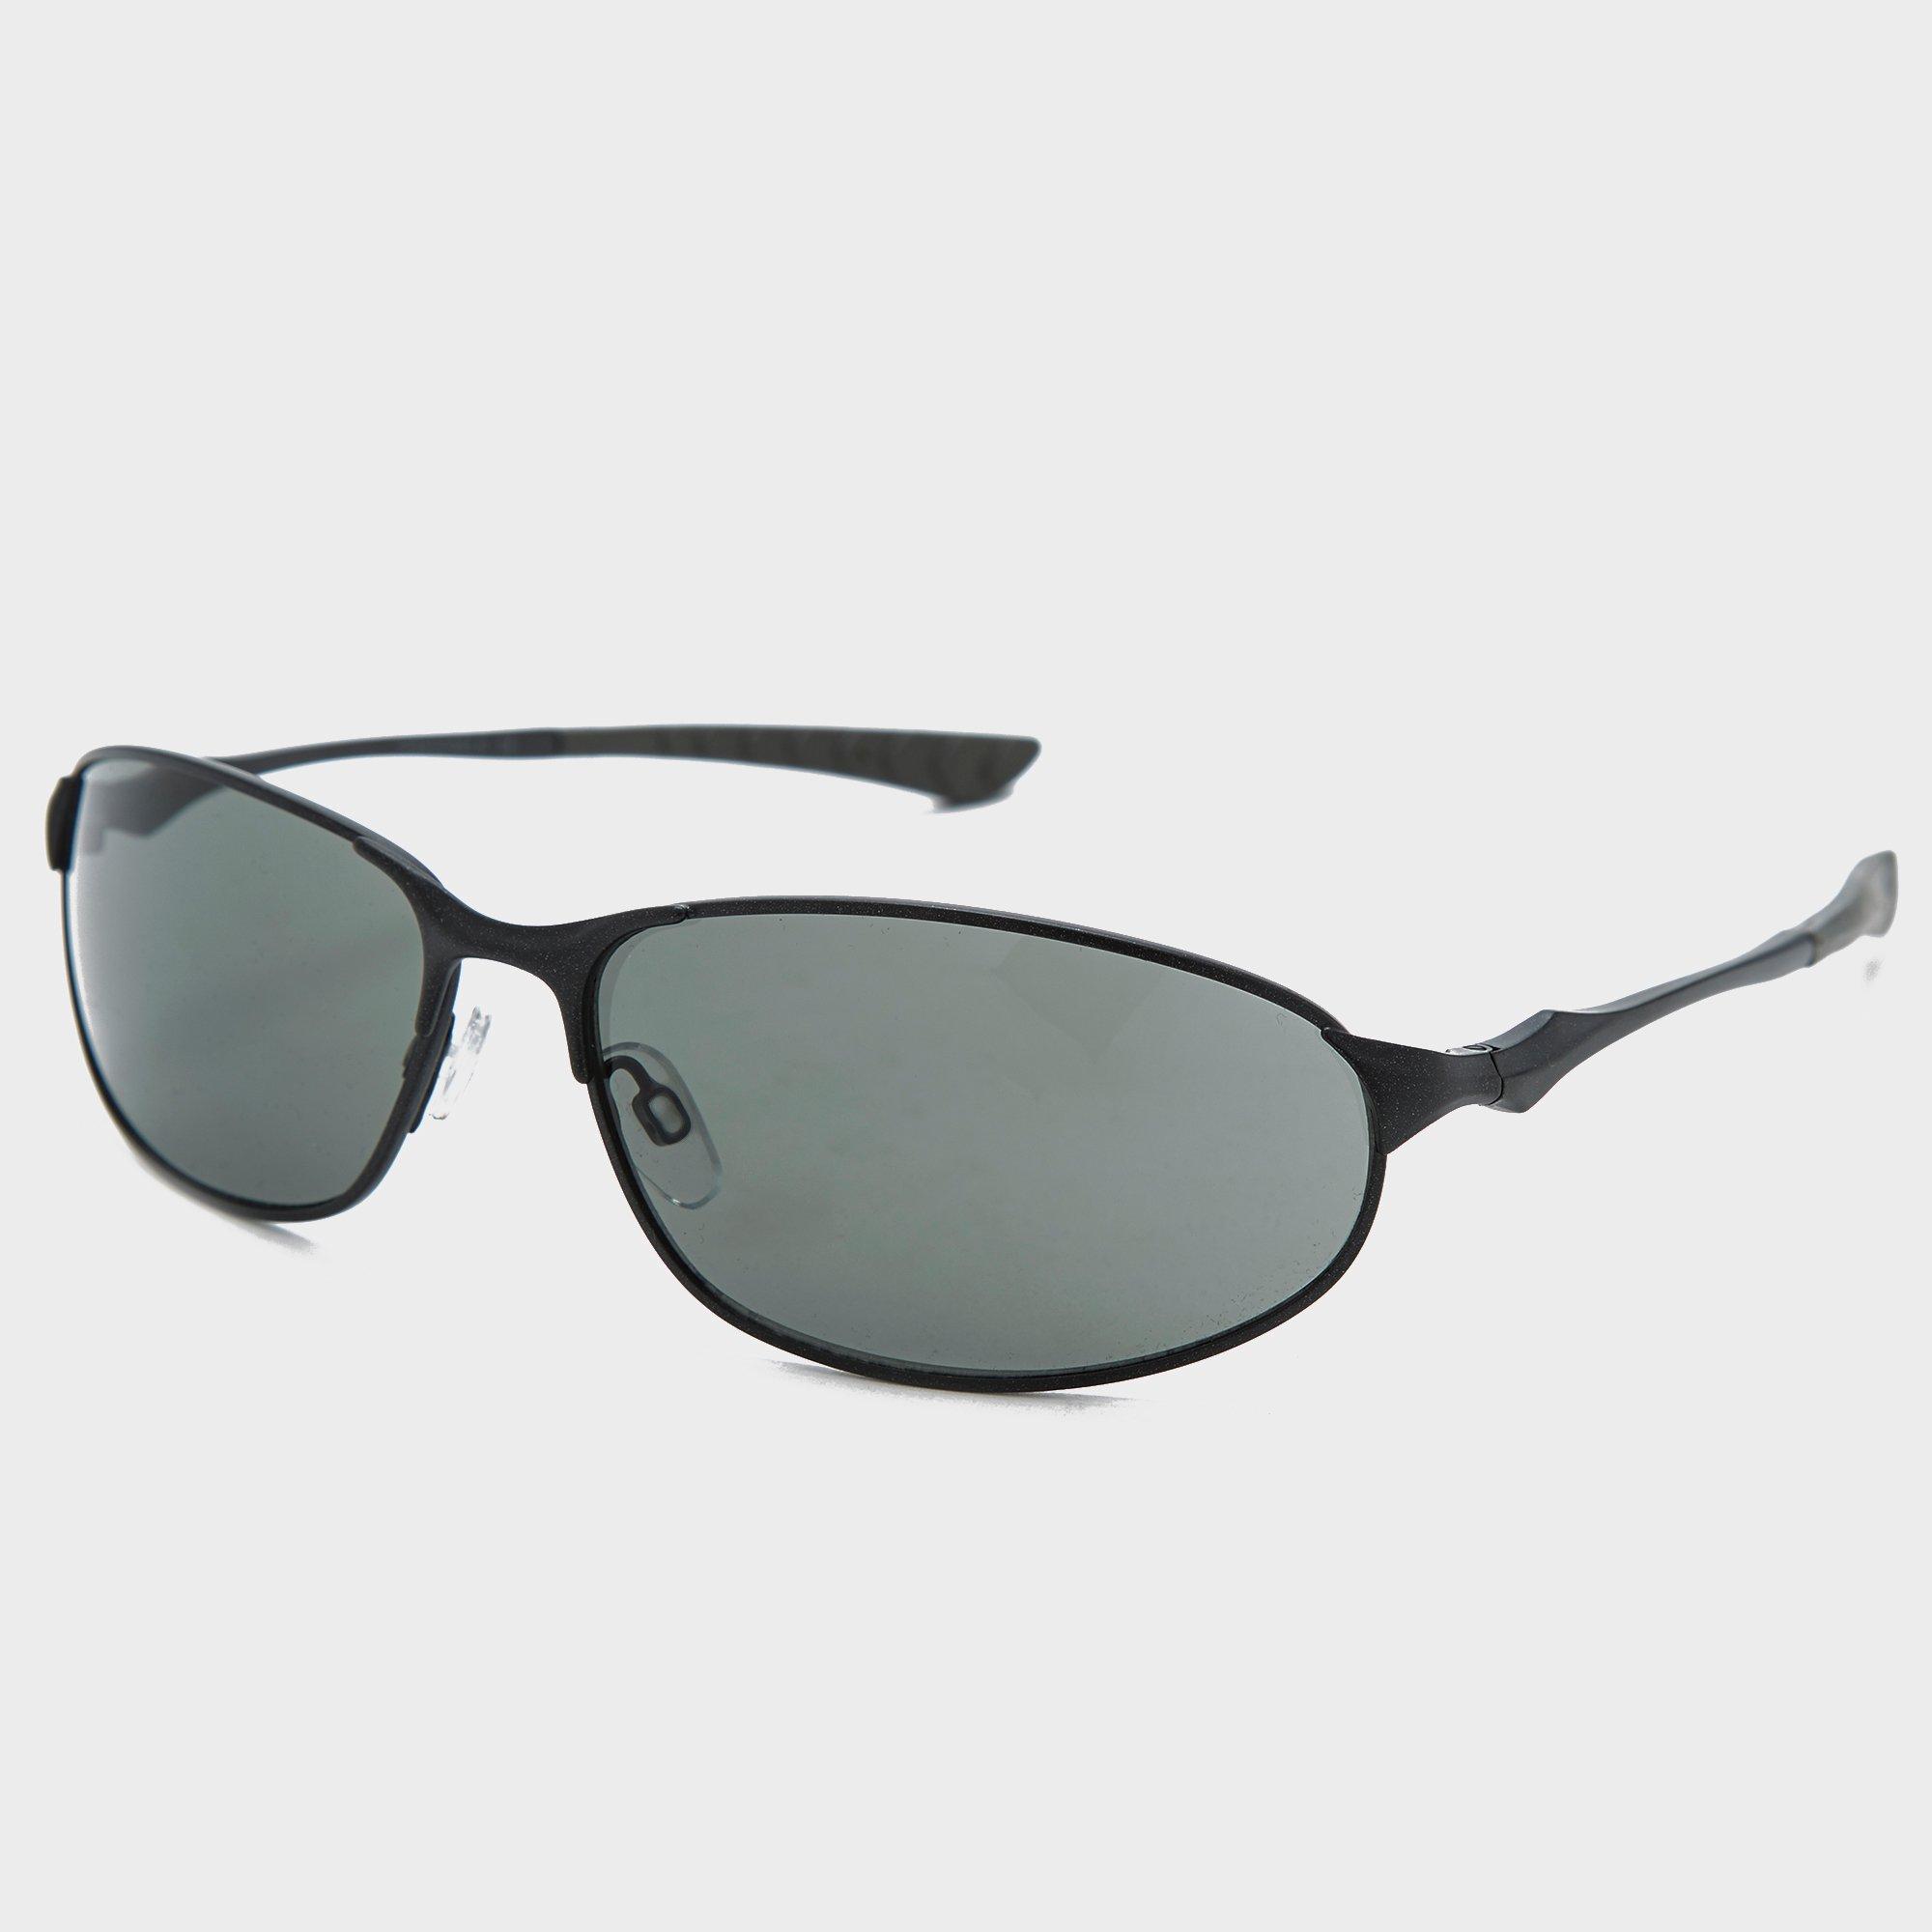 Peter Storm Mens Oval Metal Full Frame Sports Sunglasses - Black/blk  Black/blk